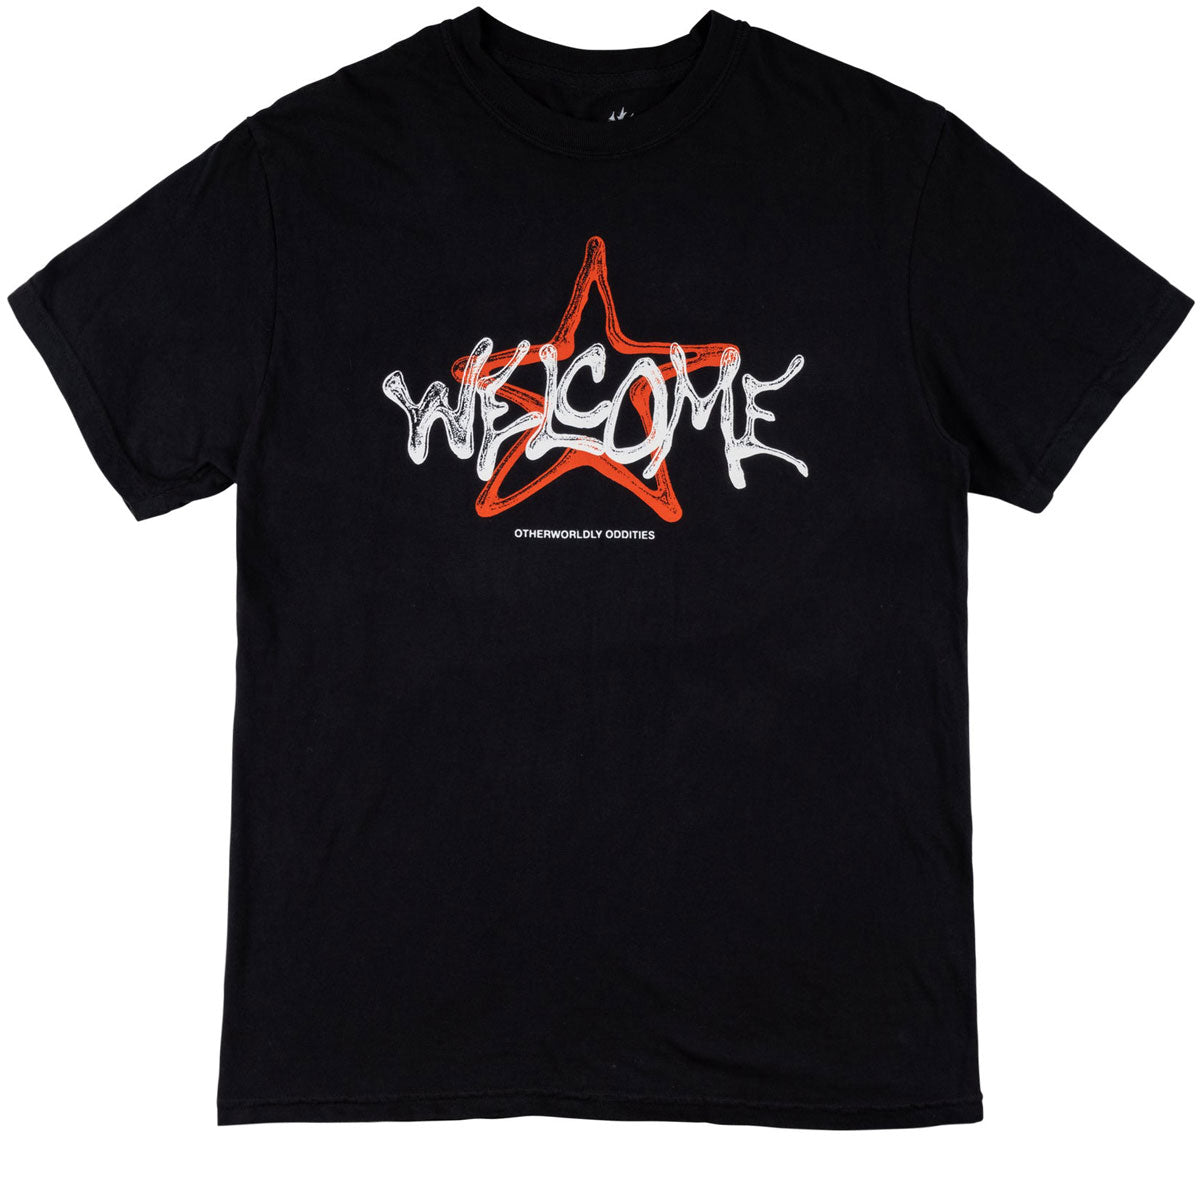 Welcome Vega T-Shirt - Black image 1